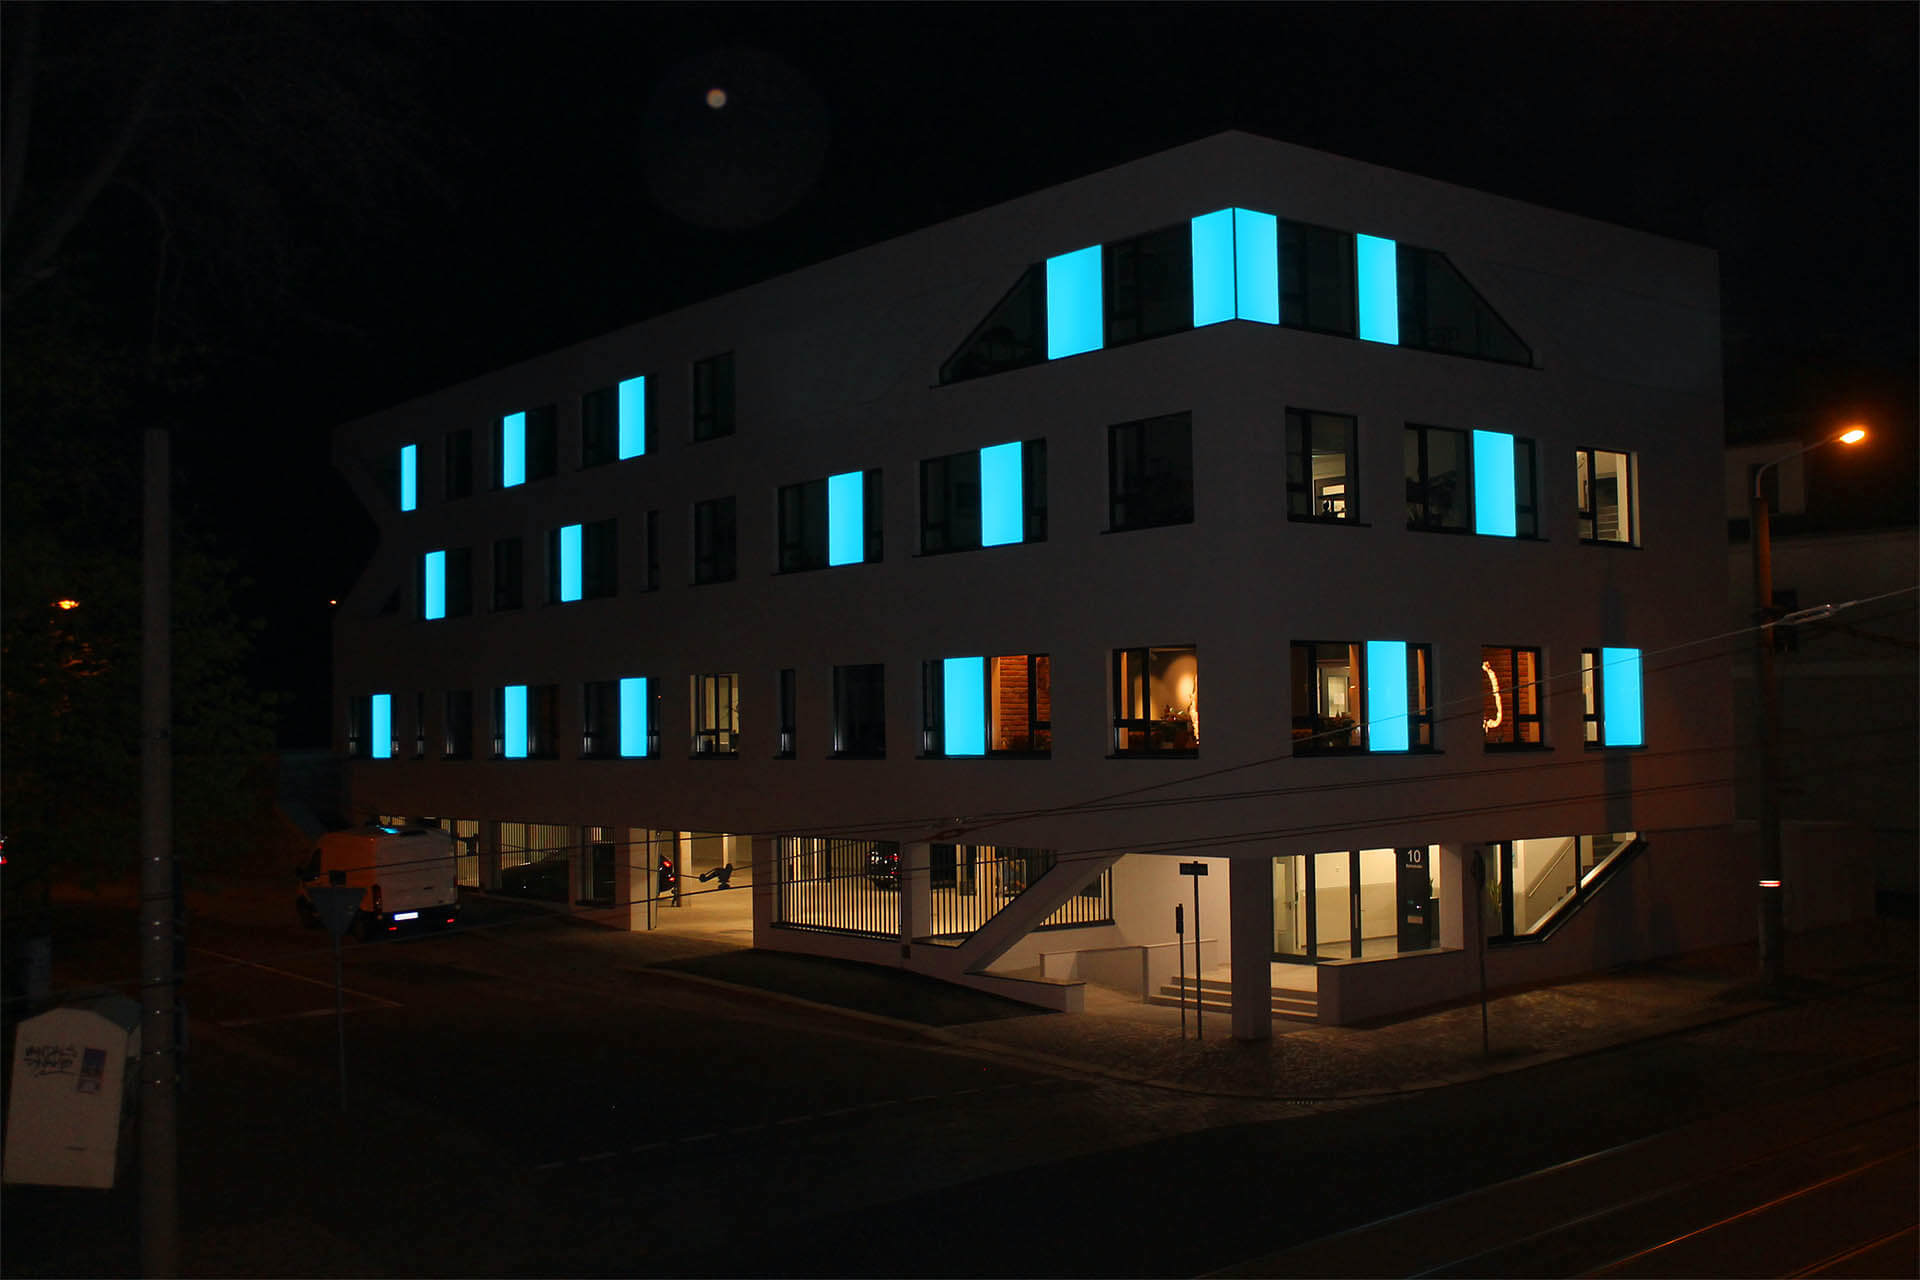 Partielle, hellblaue LED Fassadenbeleuchtung bei Nacht; led facade illumination with light blue led-panels